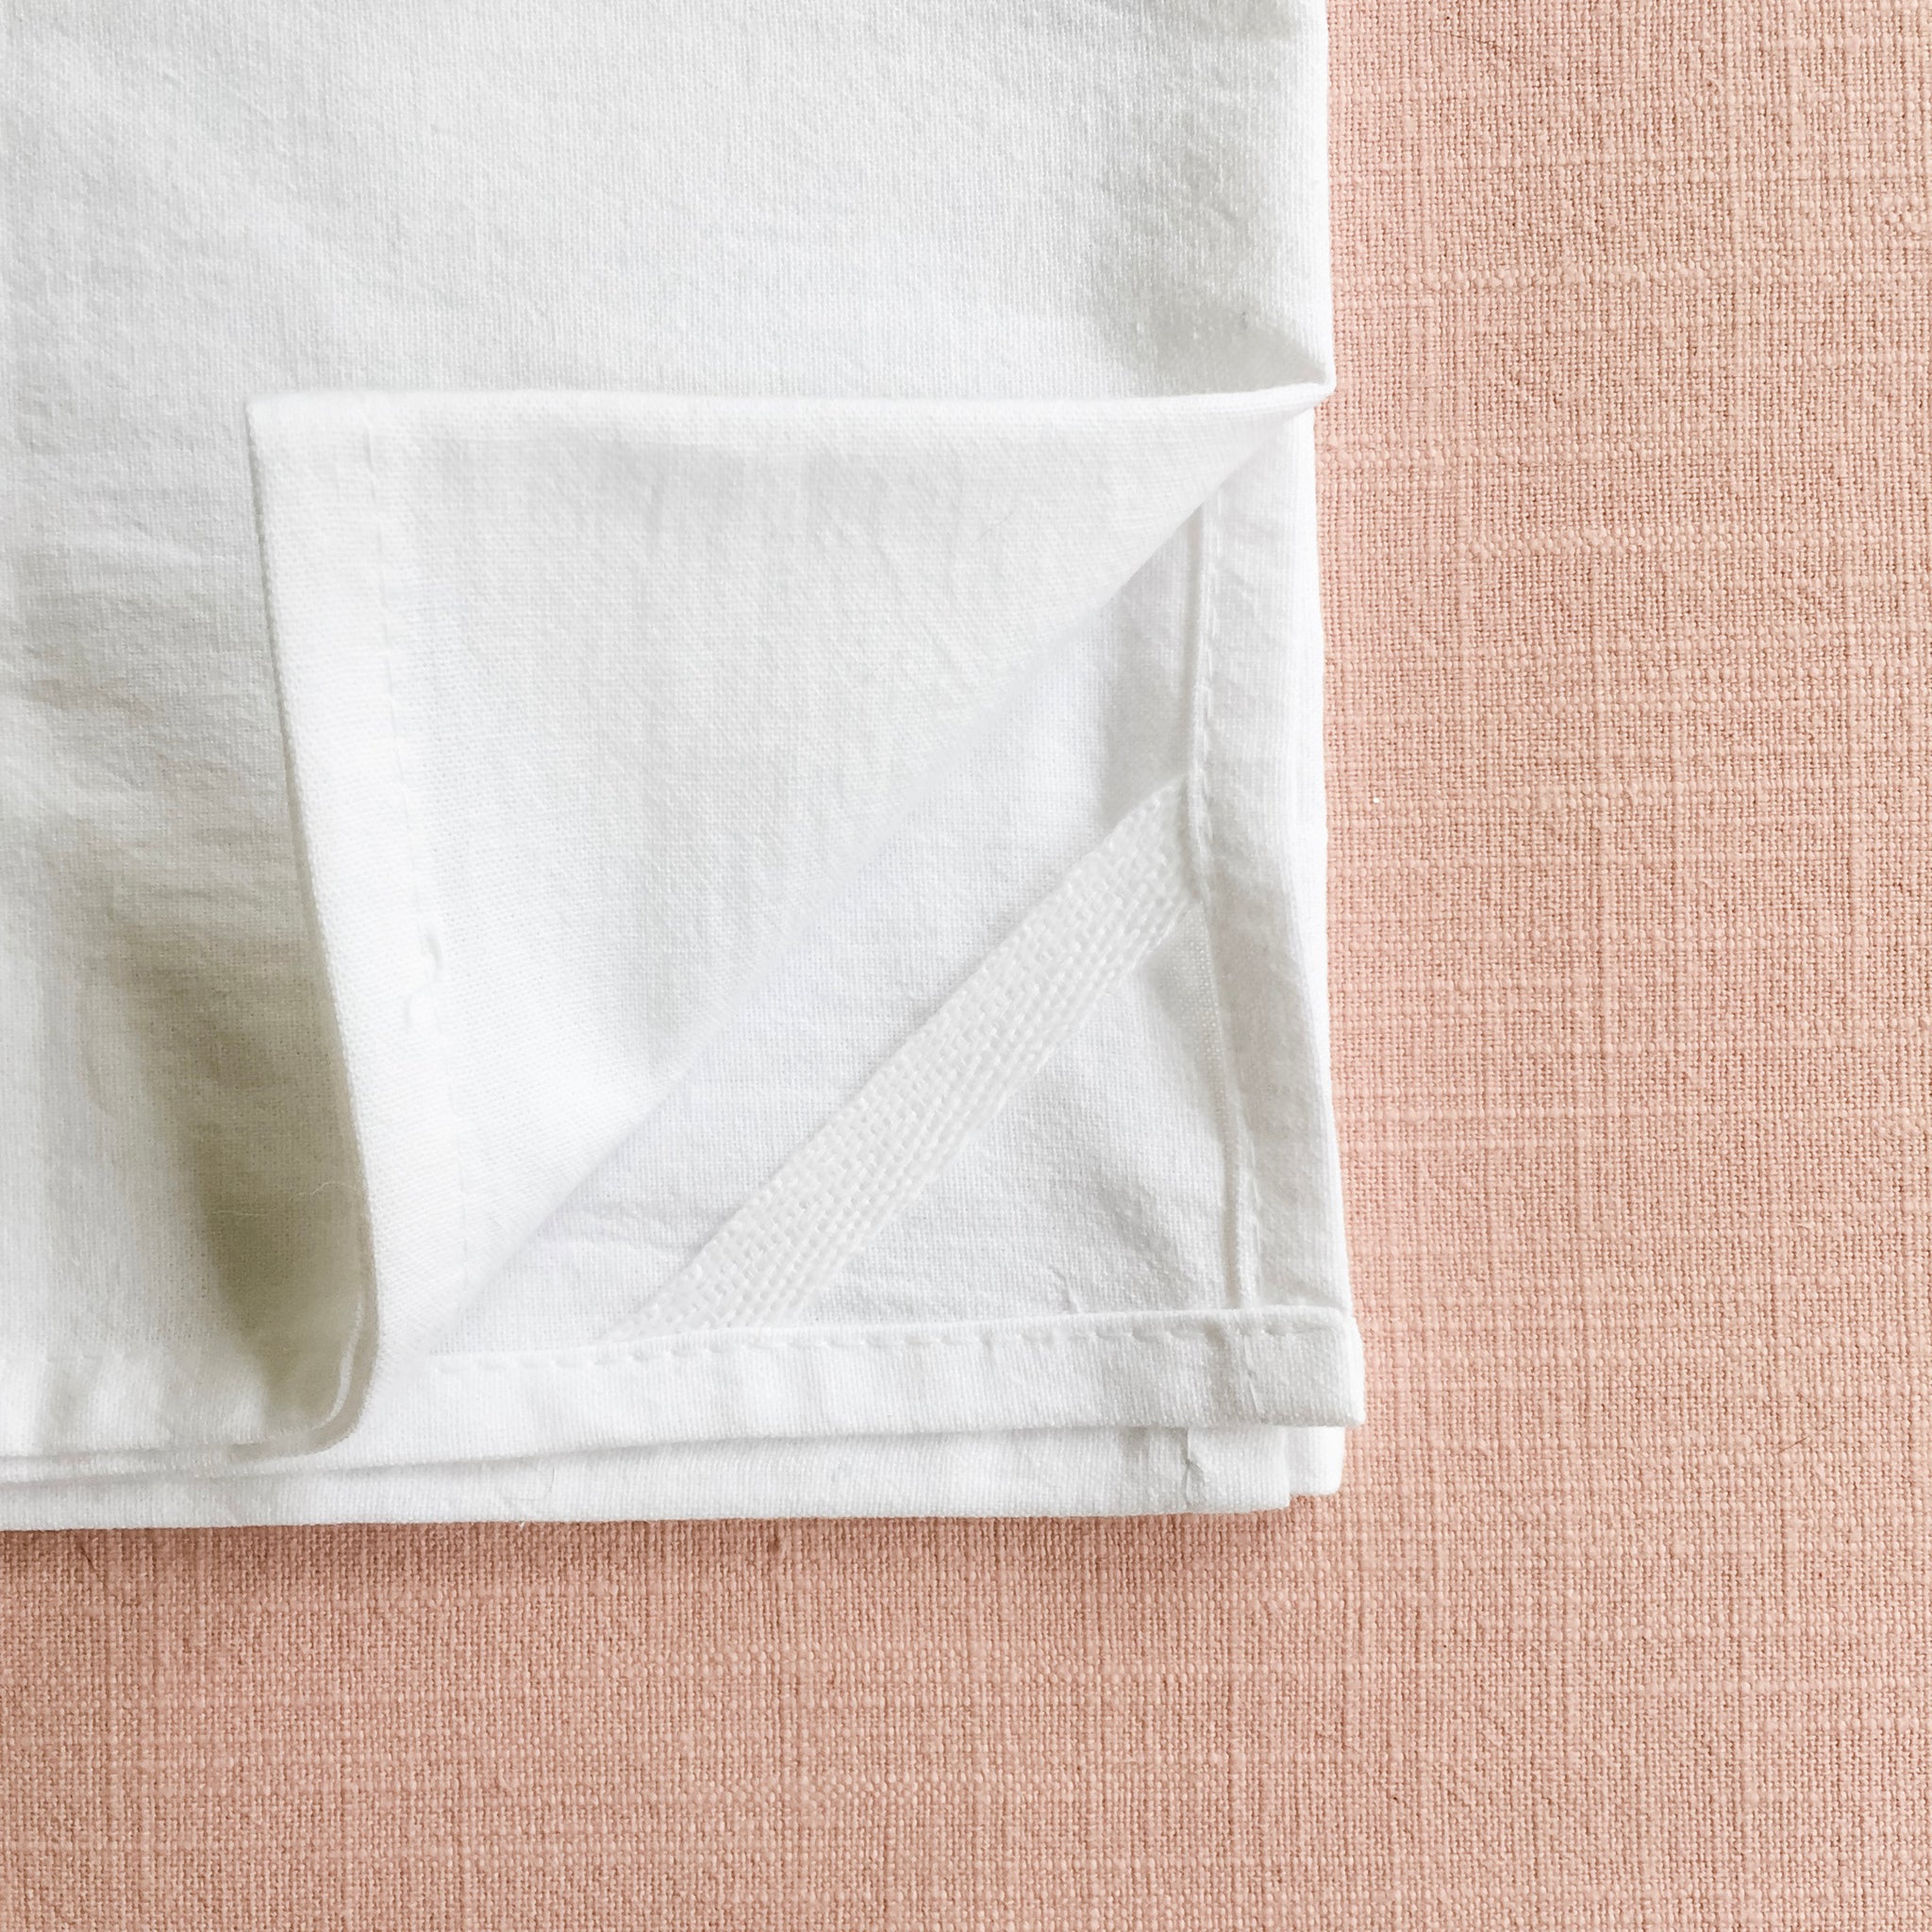 Dachshund Kitchen Towel / Tea Towel Dachshund Gifts Perfect for Kitchen Use  100% Cotton Machine Washable 